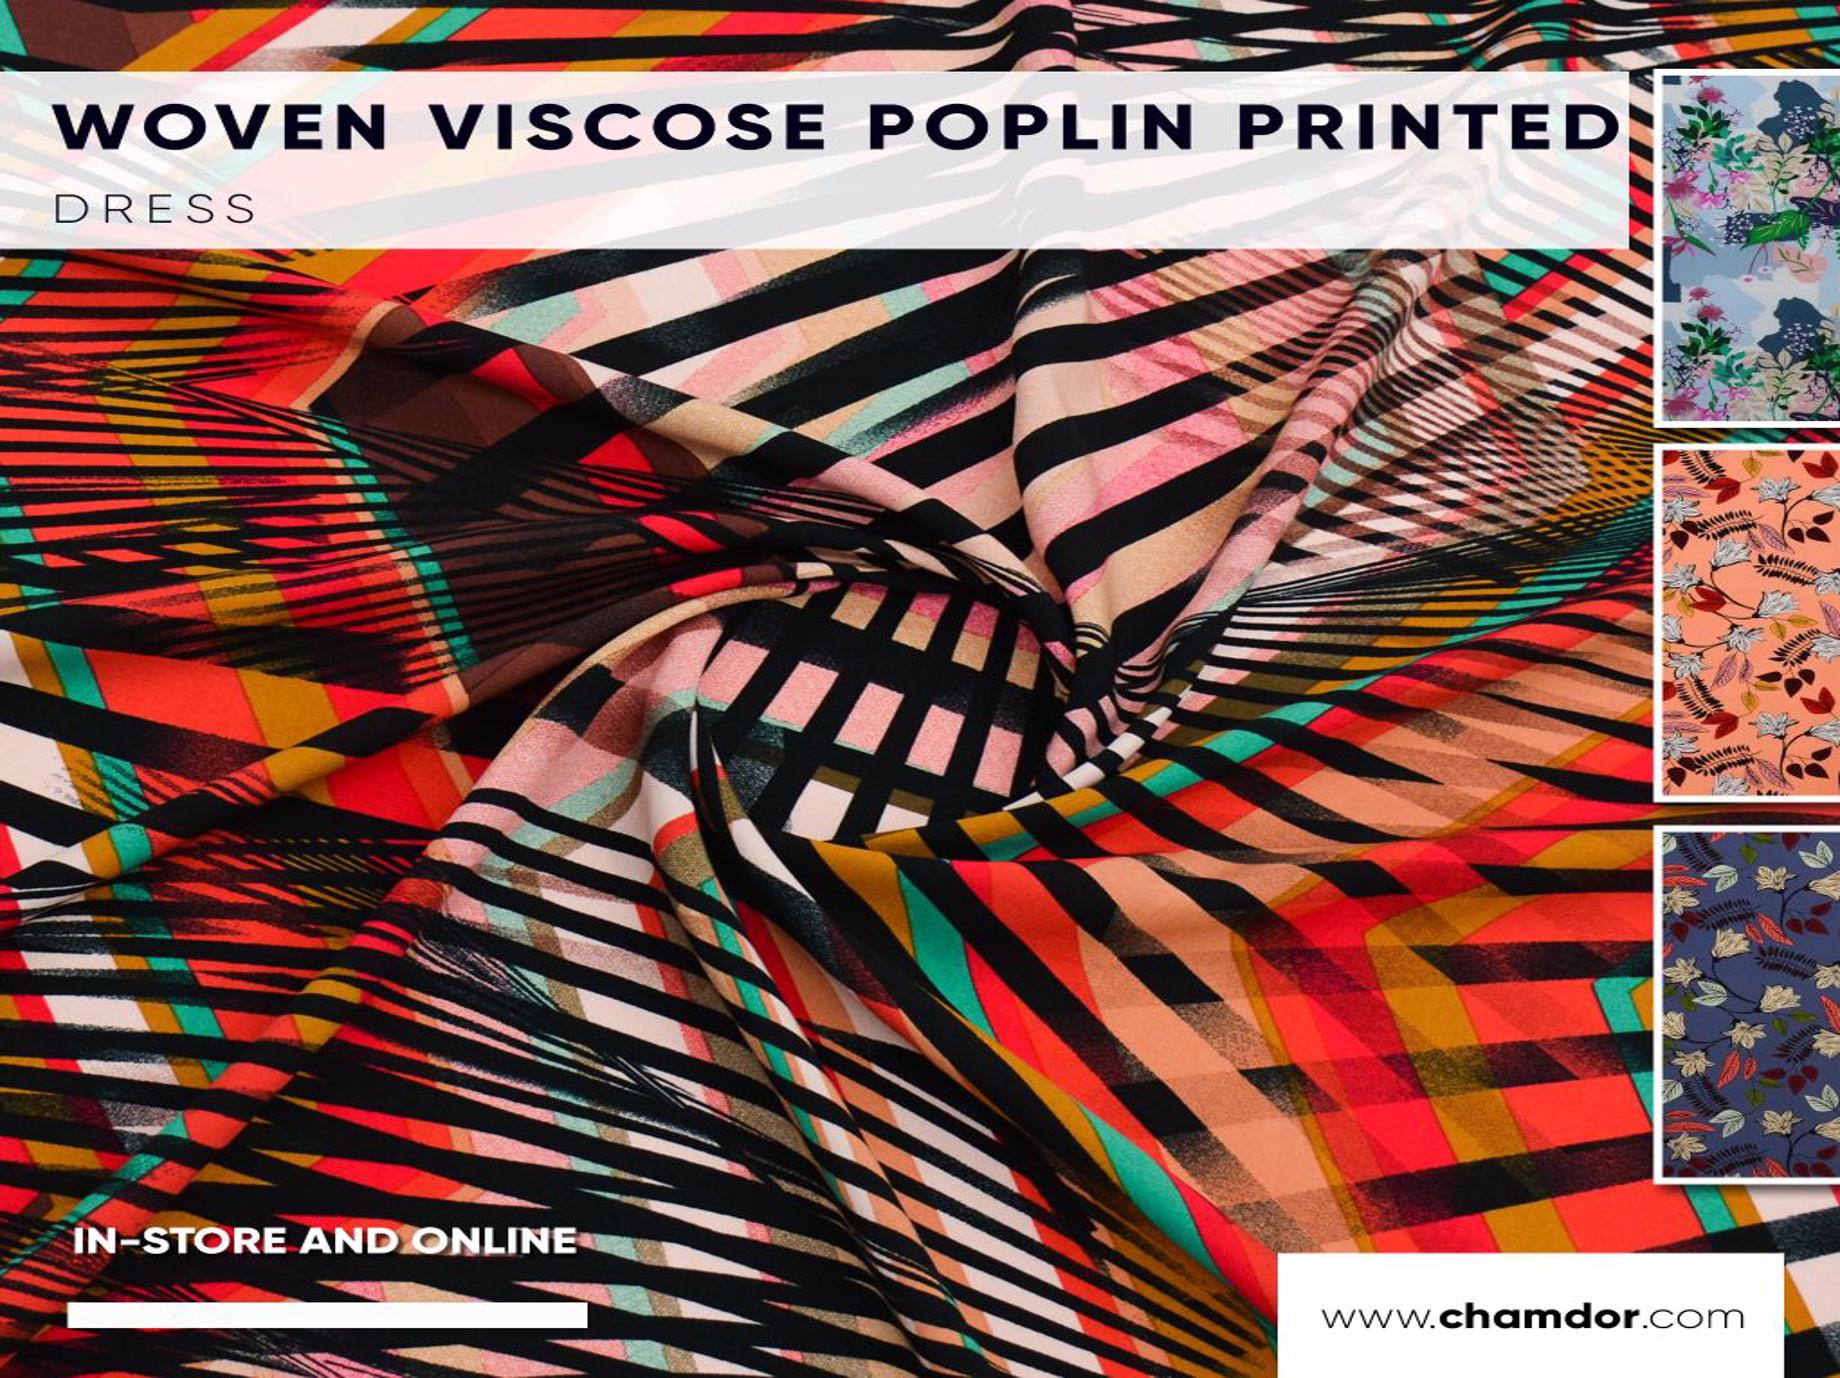 Woven Viscose Poplin Printed